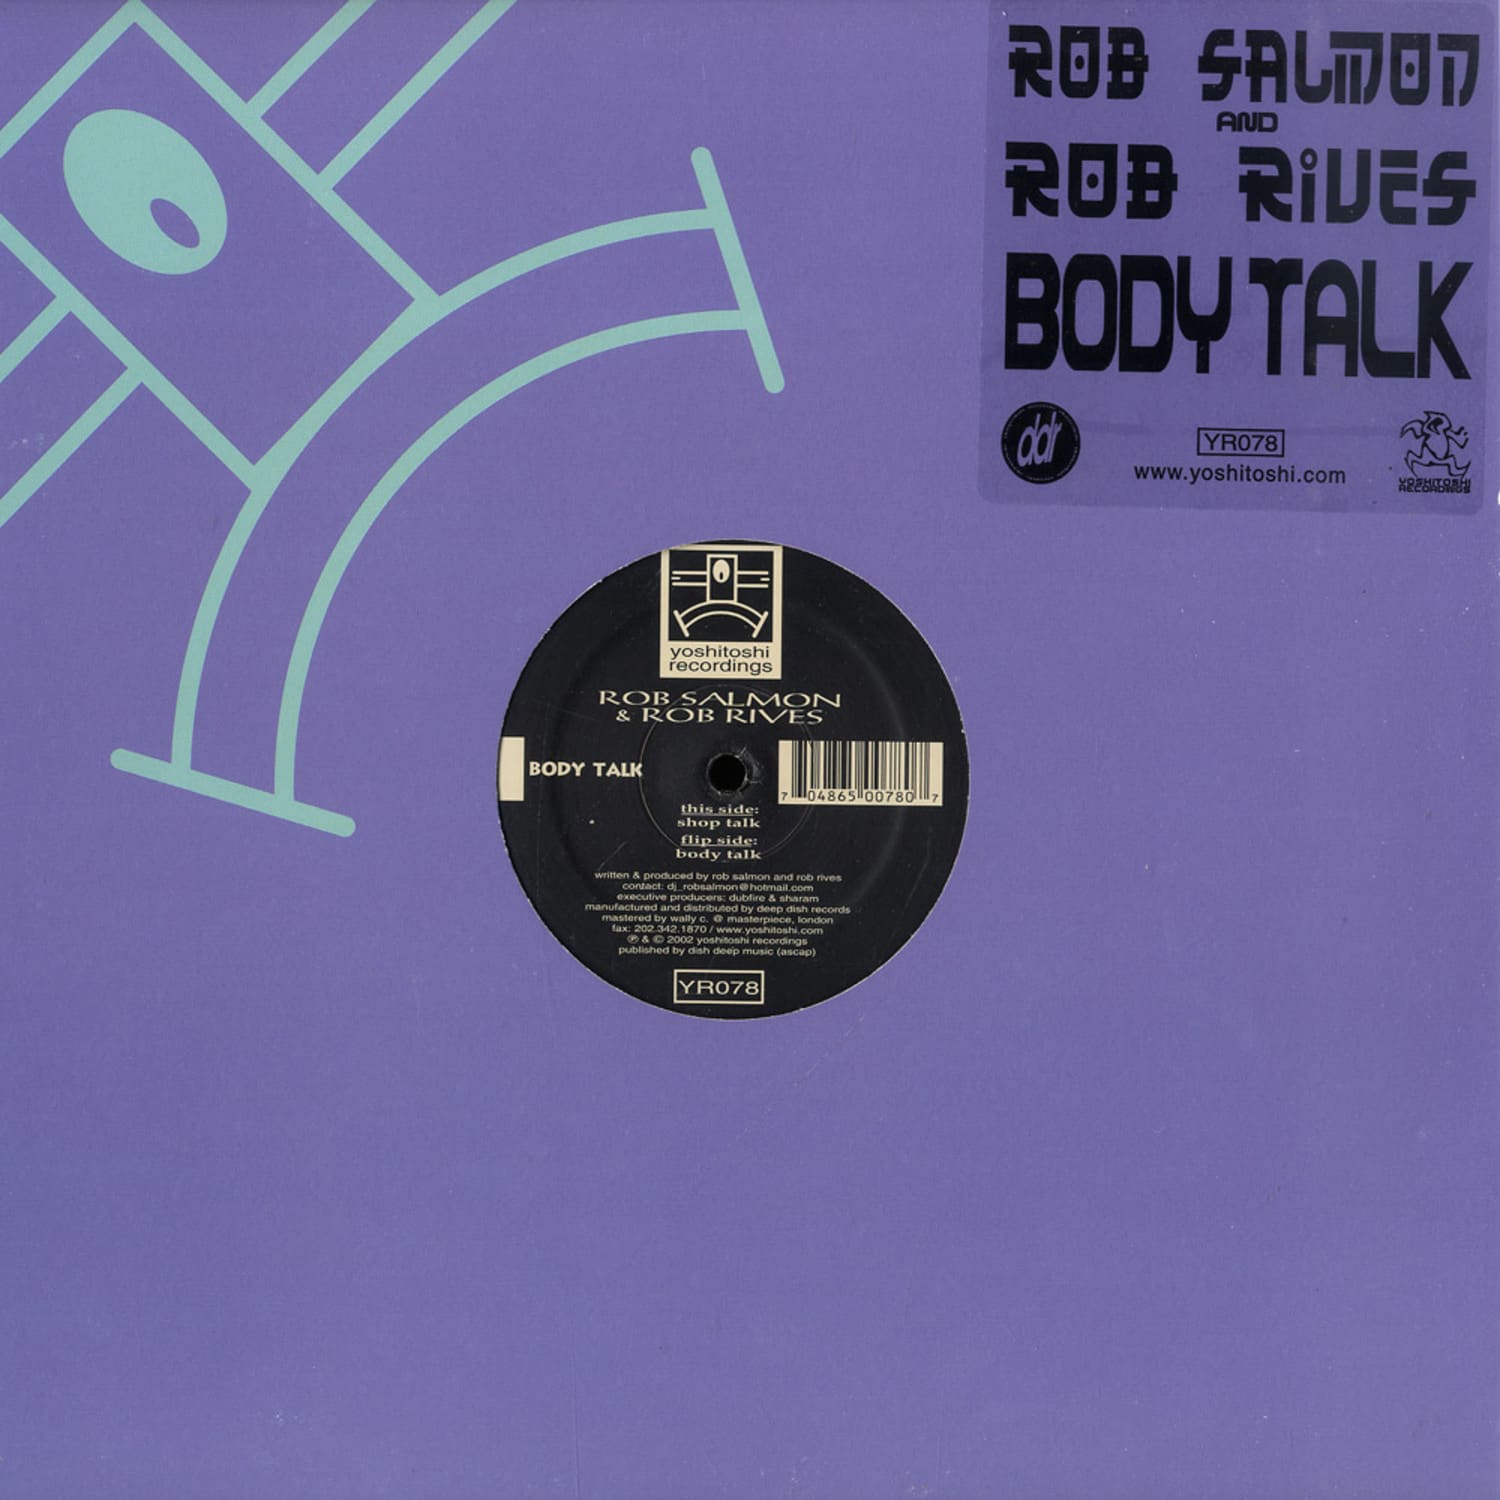 Rob Salmon & Rob Rives - BODY TALK